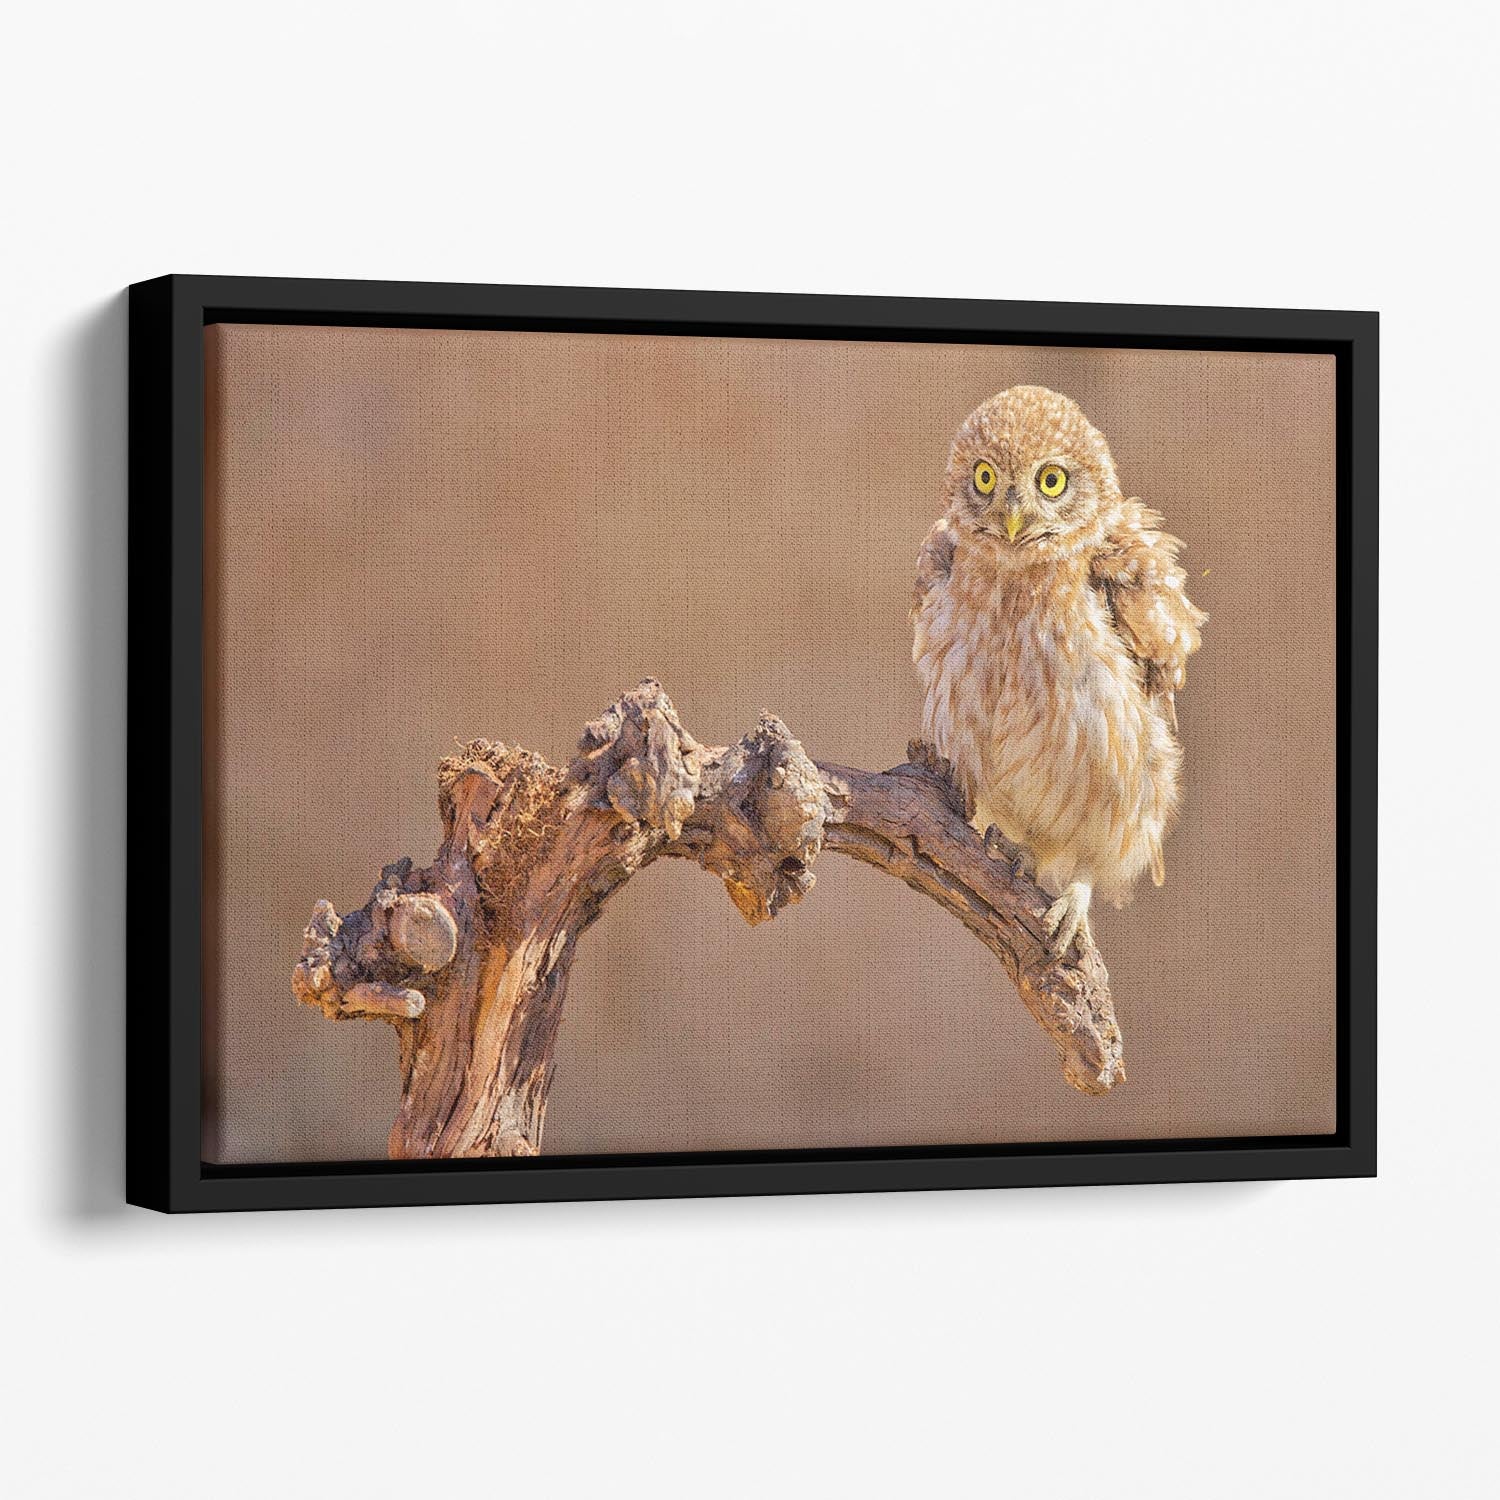 Little Owl On A Branch Floating Framed Canvas - Canvas Art Rocks - 1